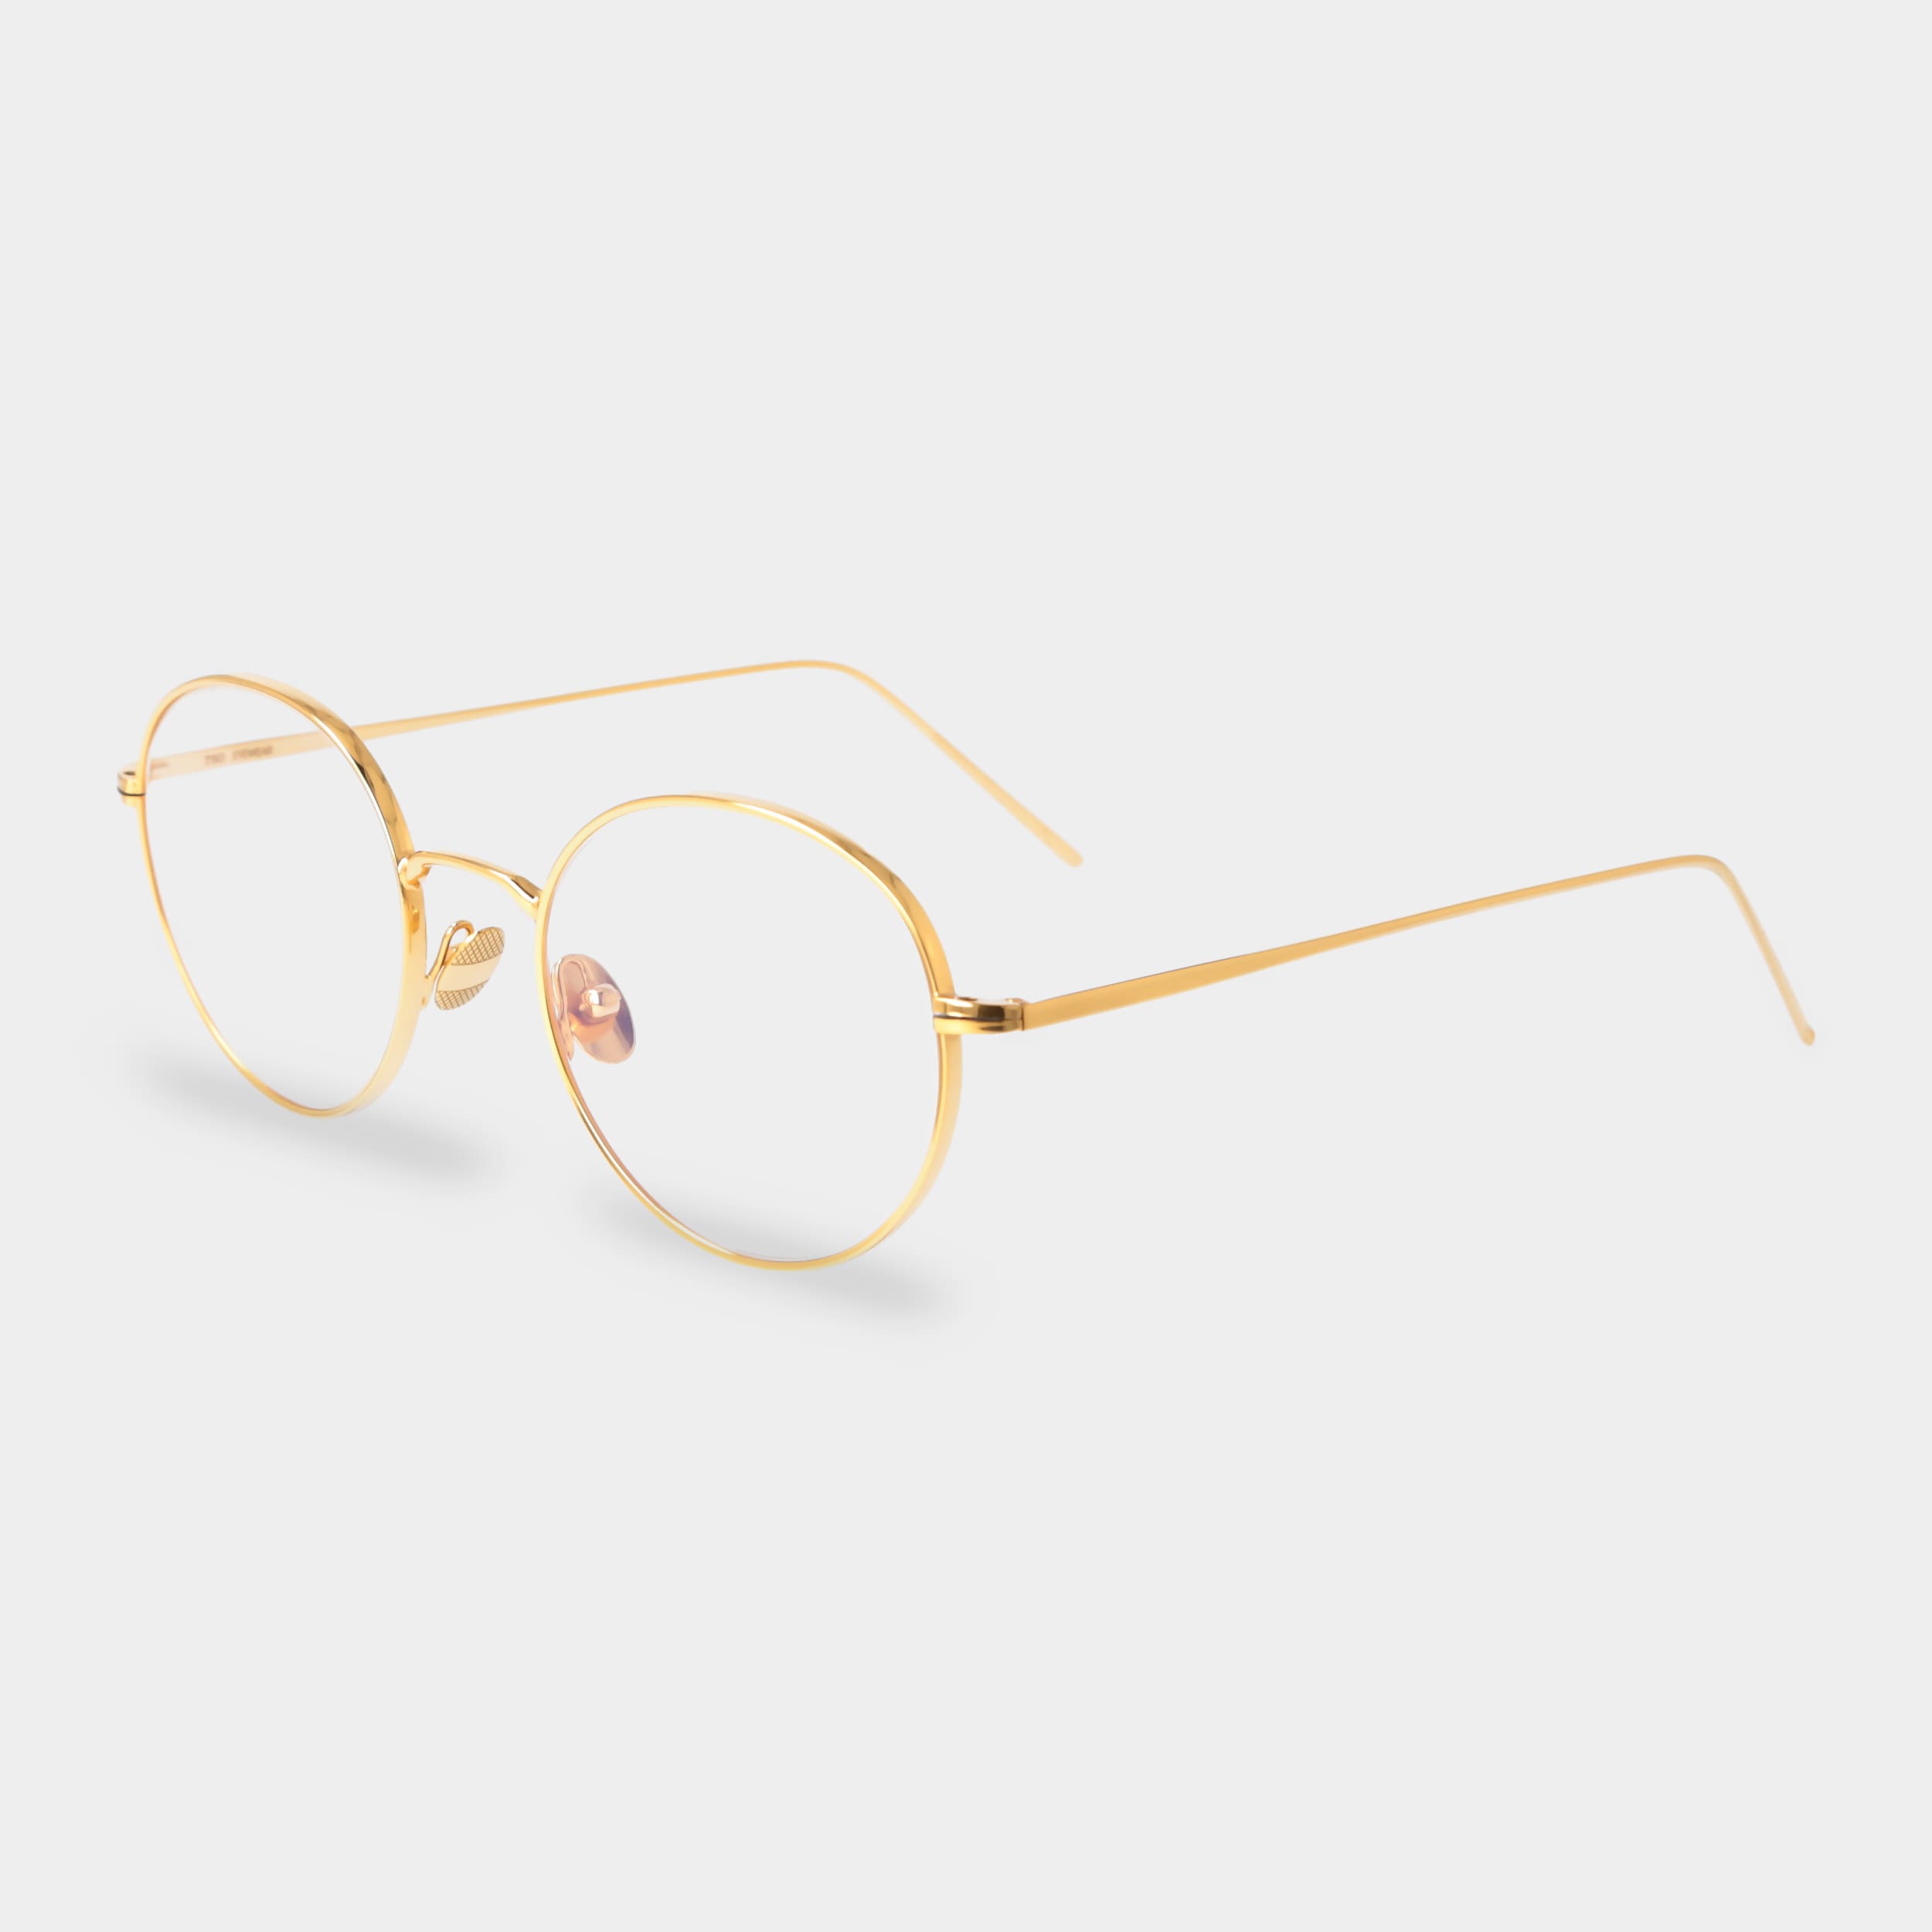 eyeglasses-ulster-k-gold-optical-tbd-eyewear-total